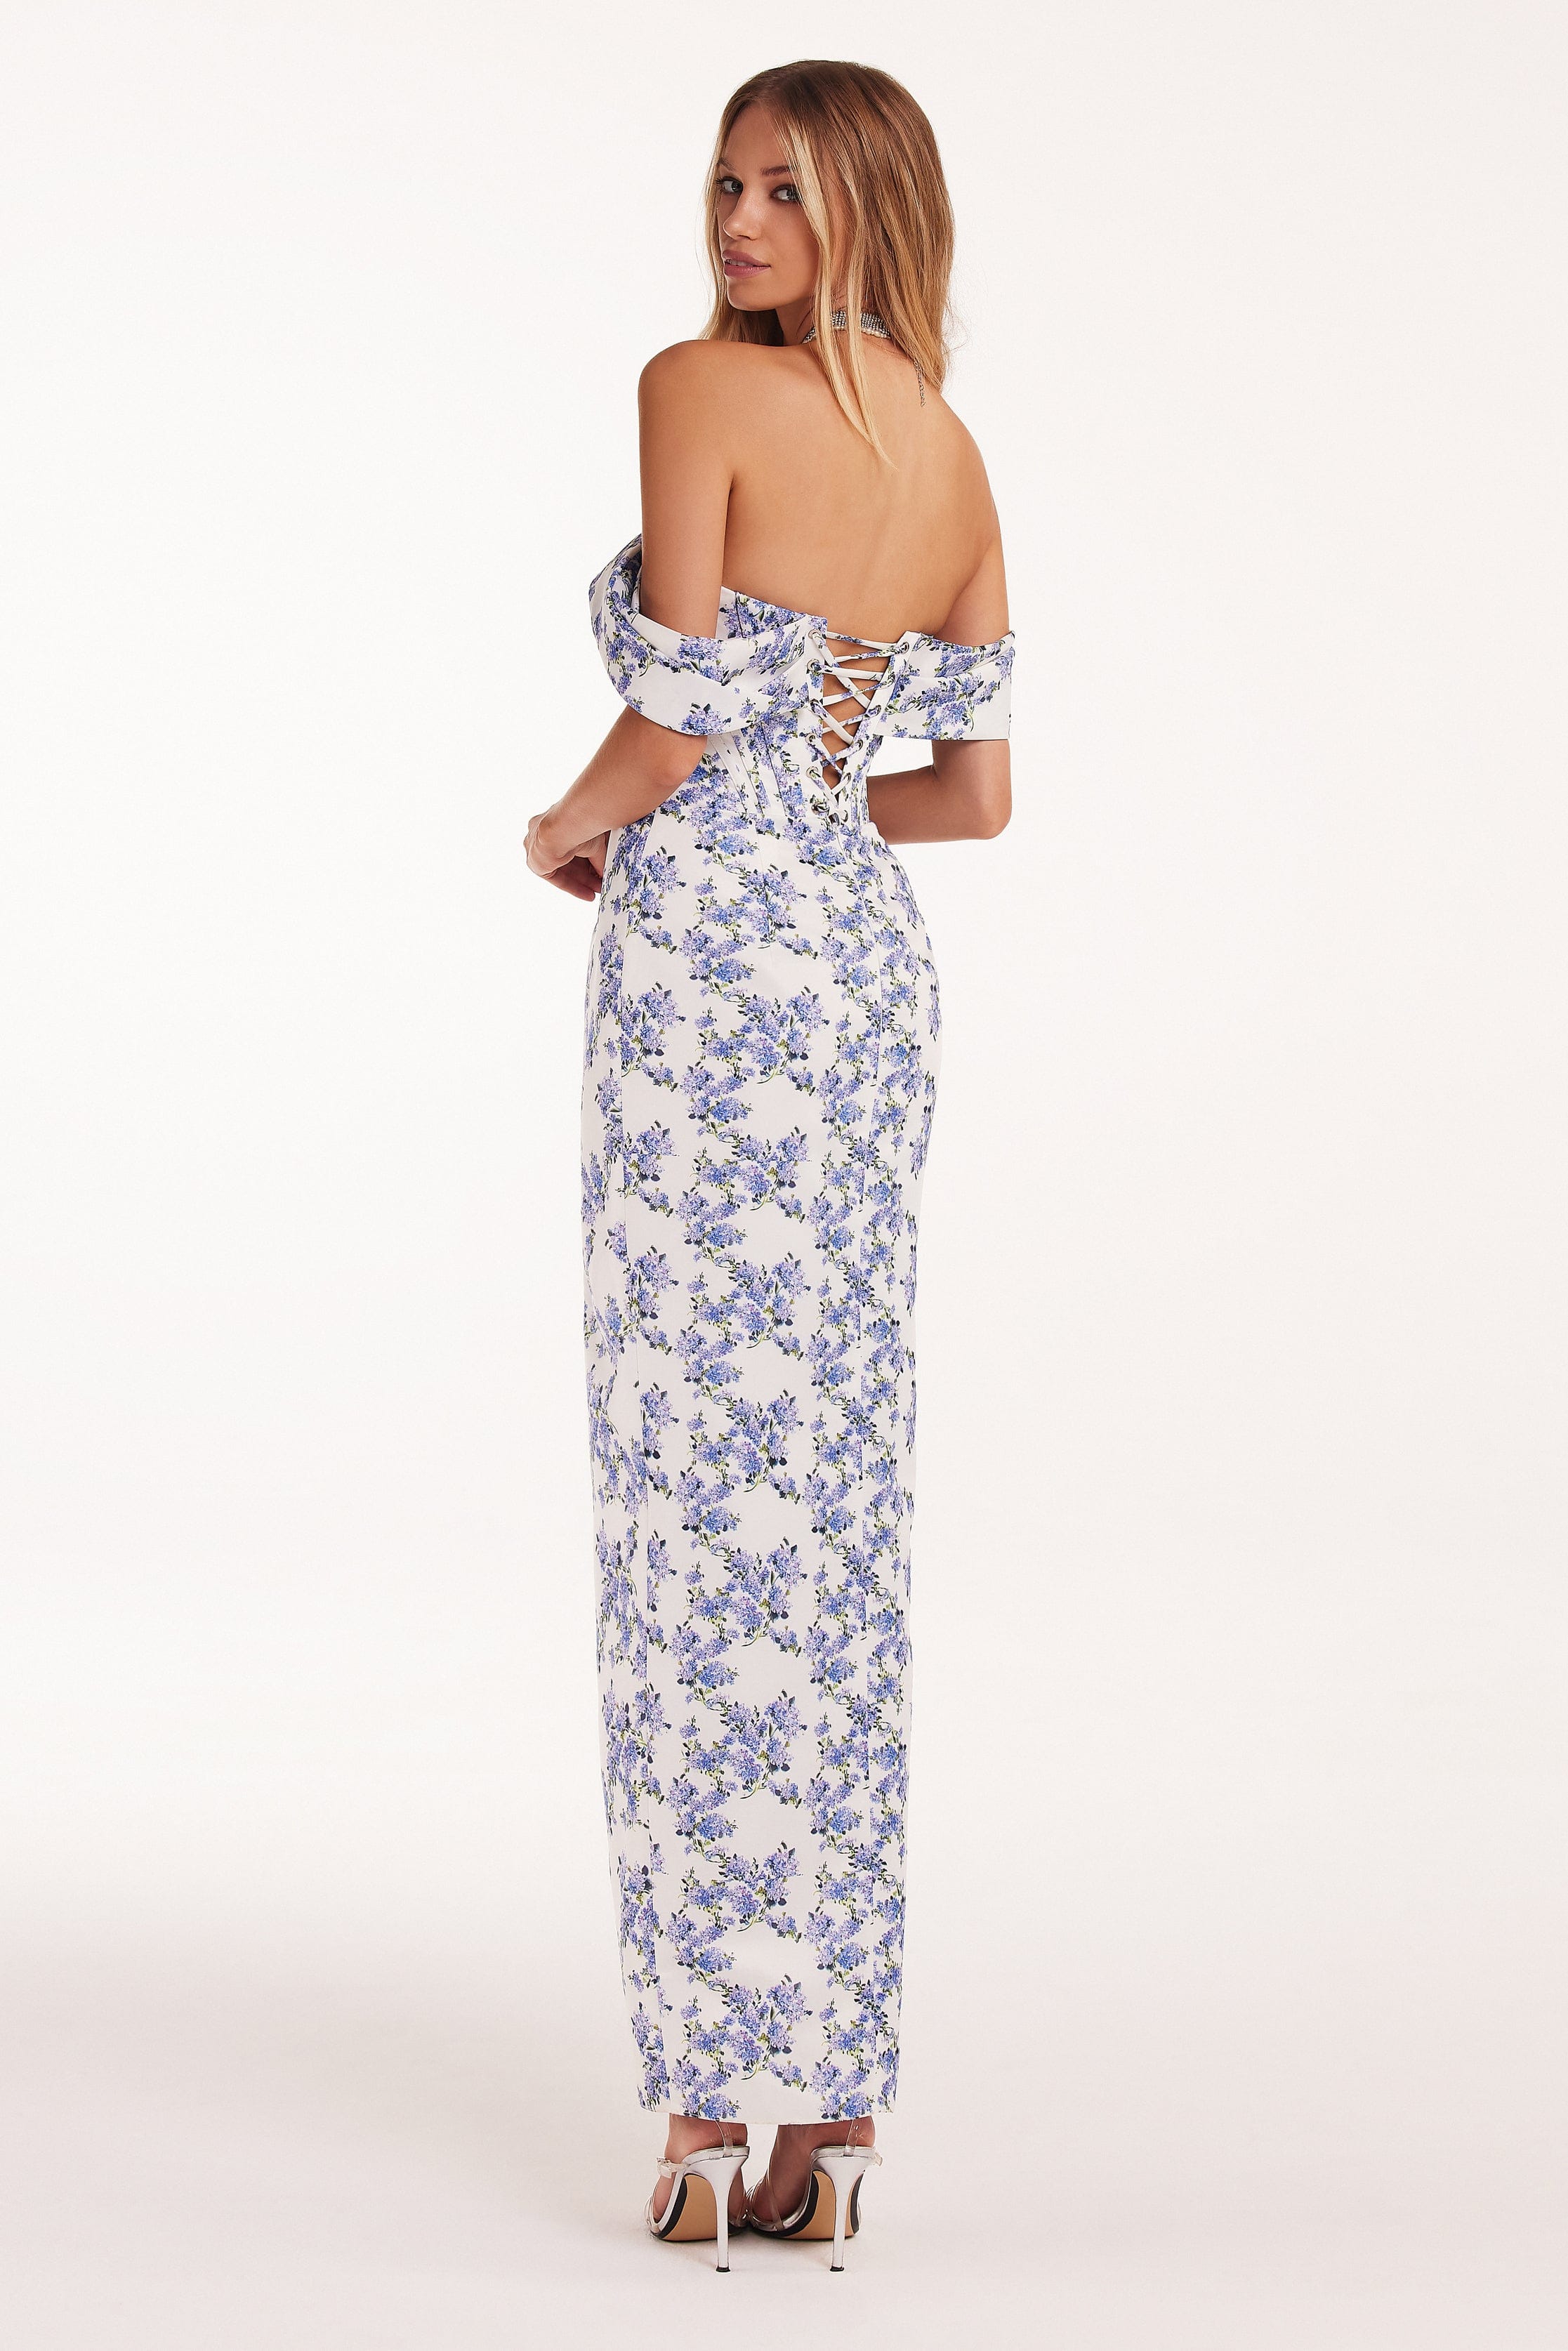 Blue Hydrangea off-shoulder satin dress ➤➤ Milla Dresses - USA, Worldwide  delivery